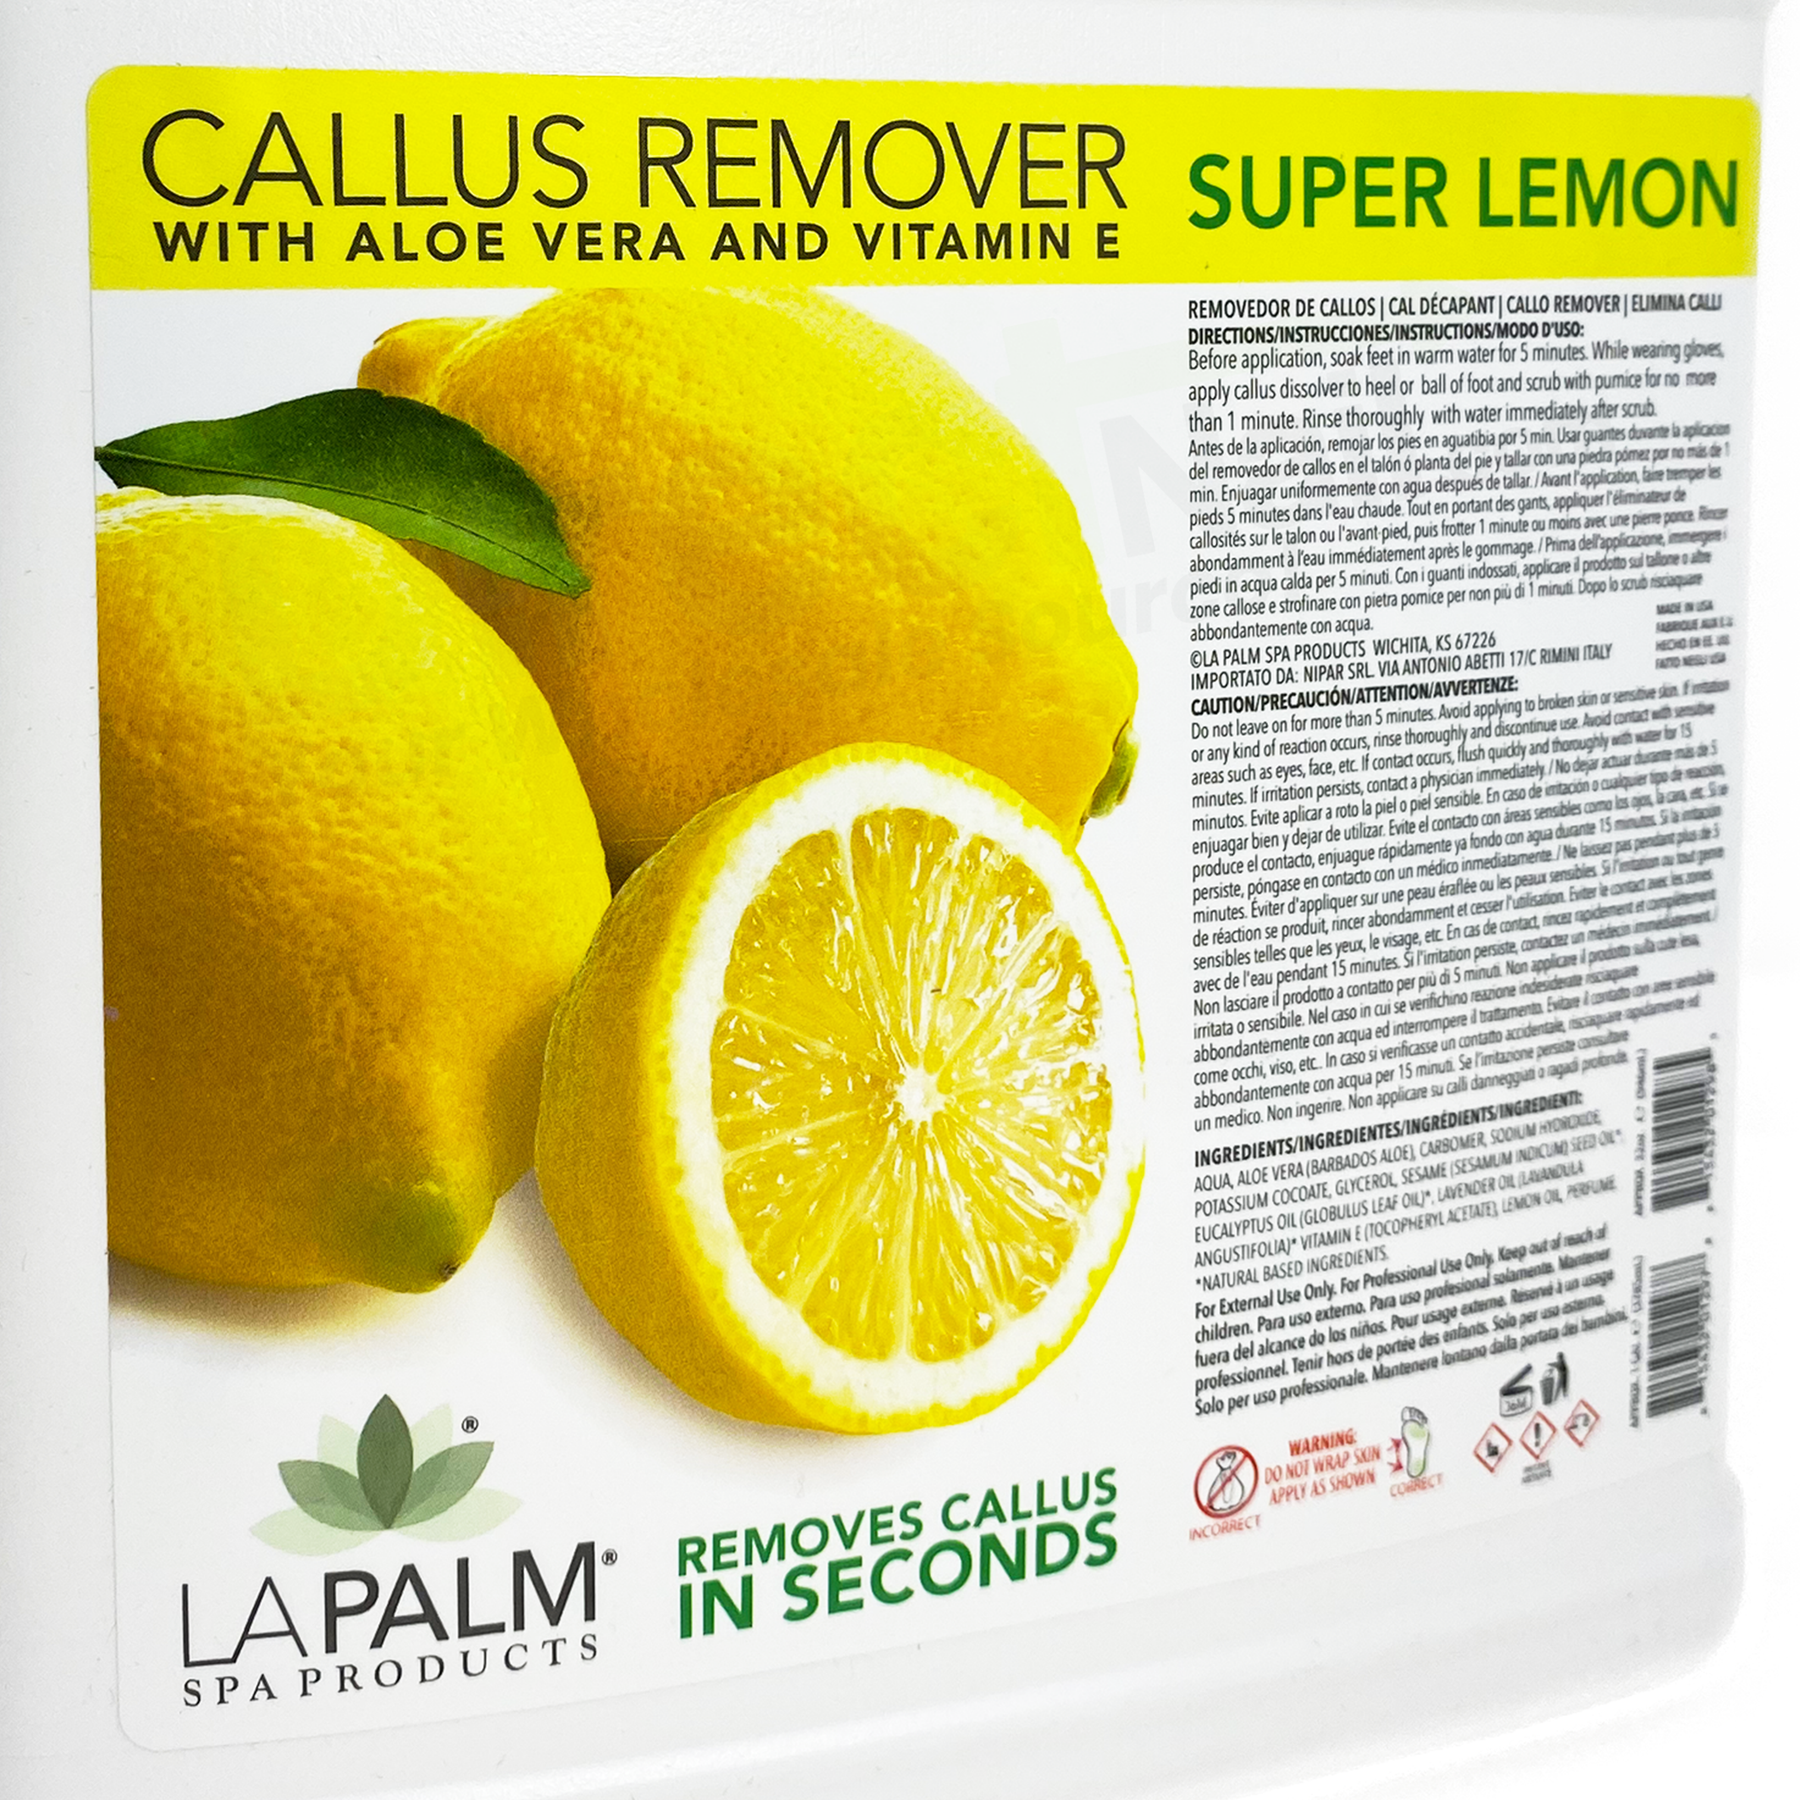 Callus Remover Gel Lemon - Wholesales Pedicure - Professional Strength